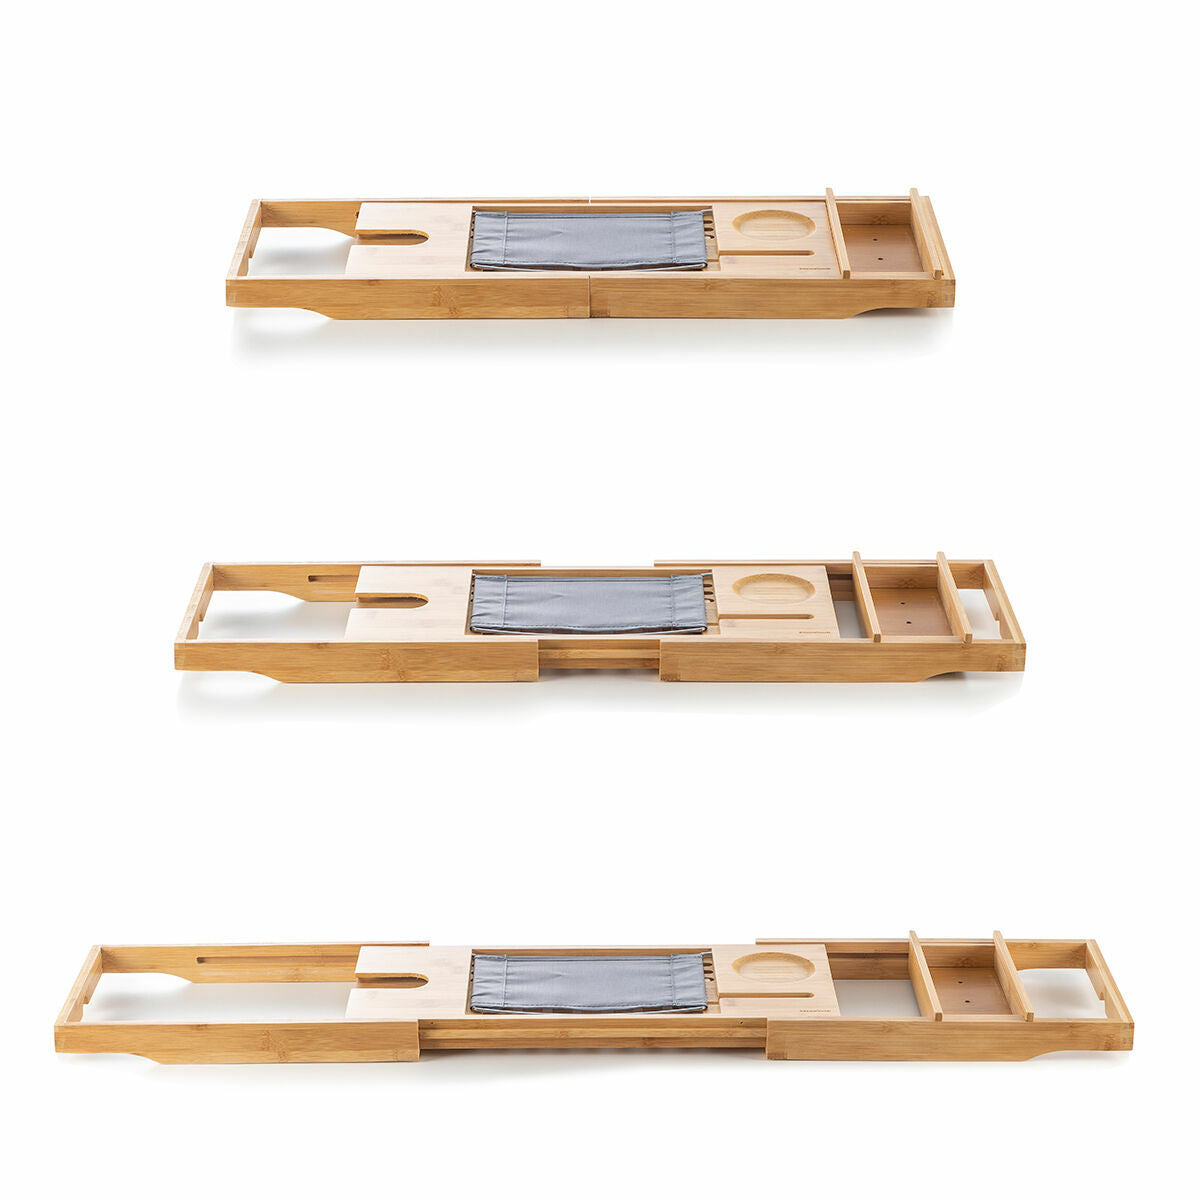 Extendable bamboo bath tray